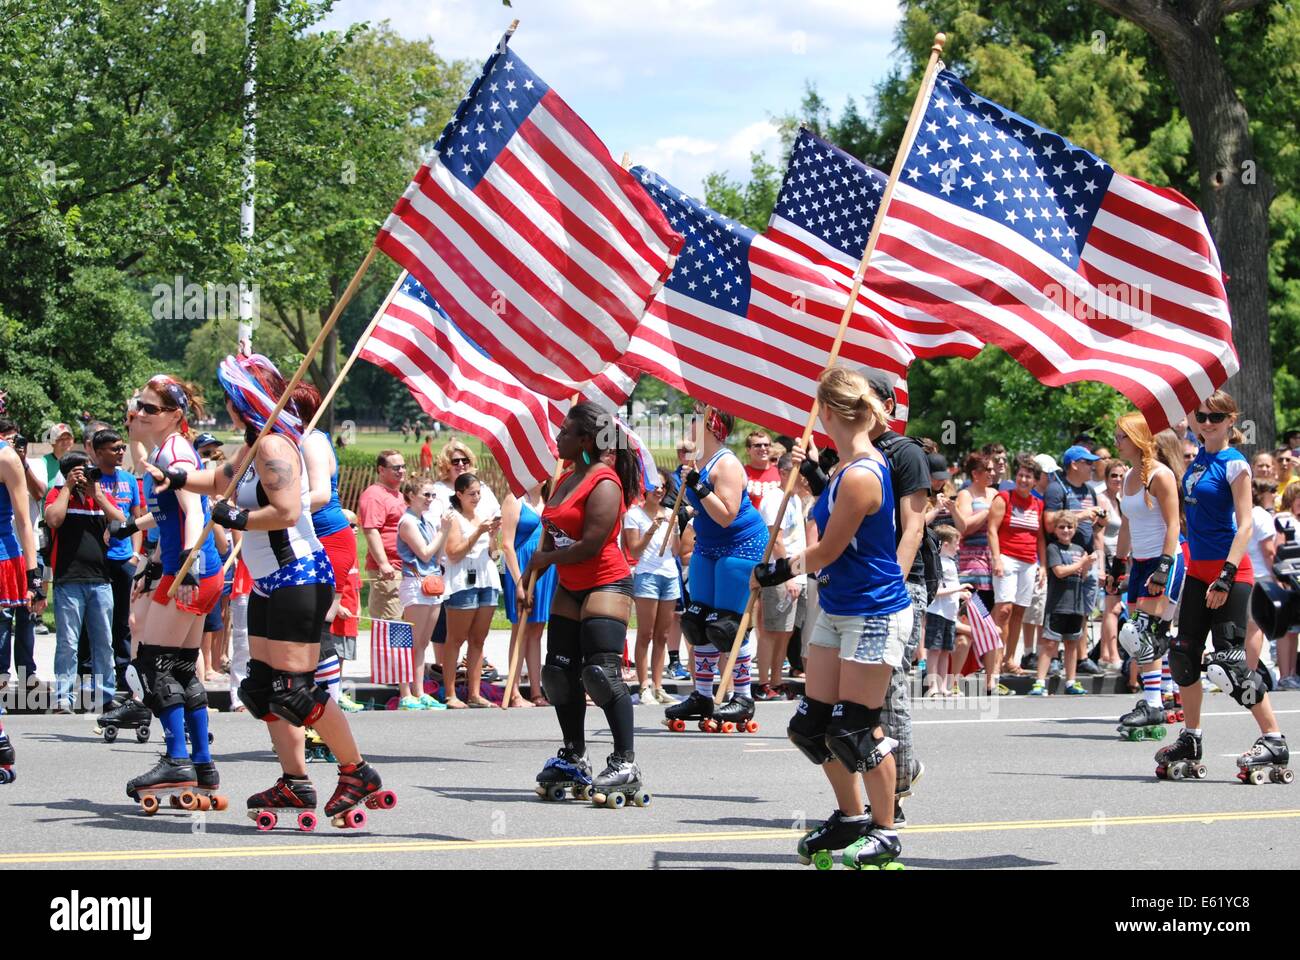 Washington parade hires stock photography and images Alamy